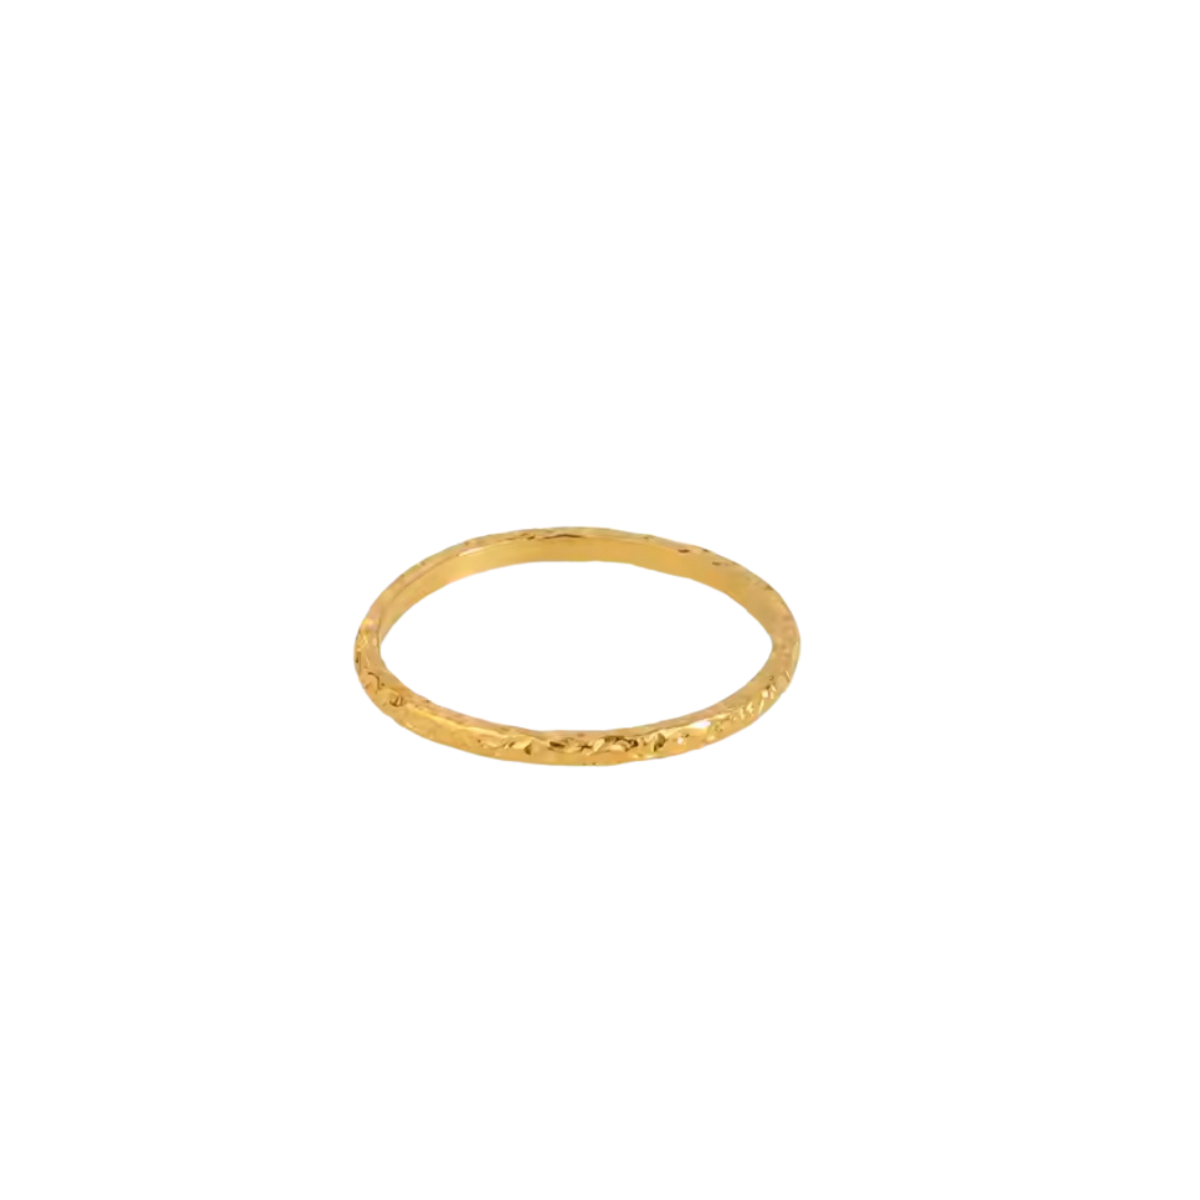 Imani 18k Gold Plated Ring Medium